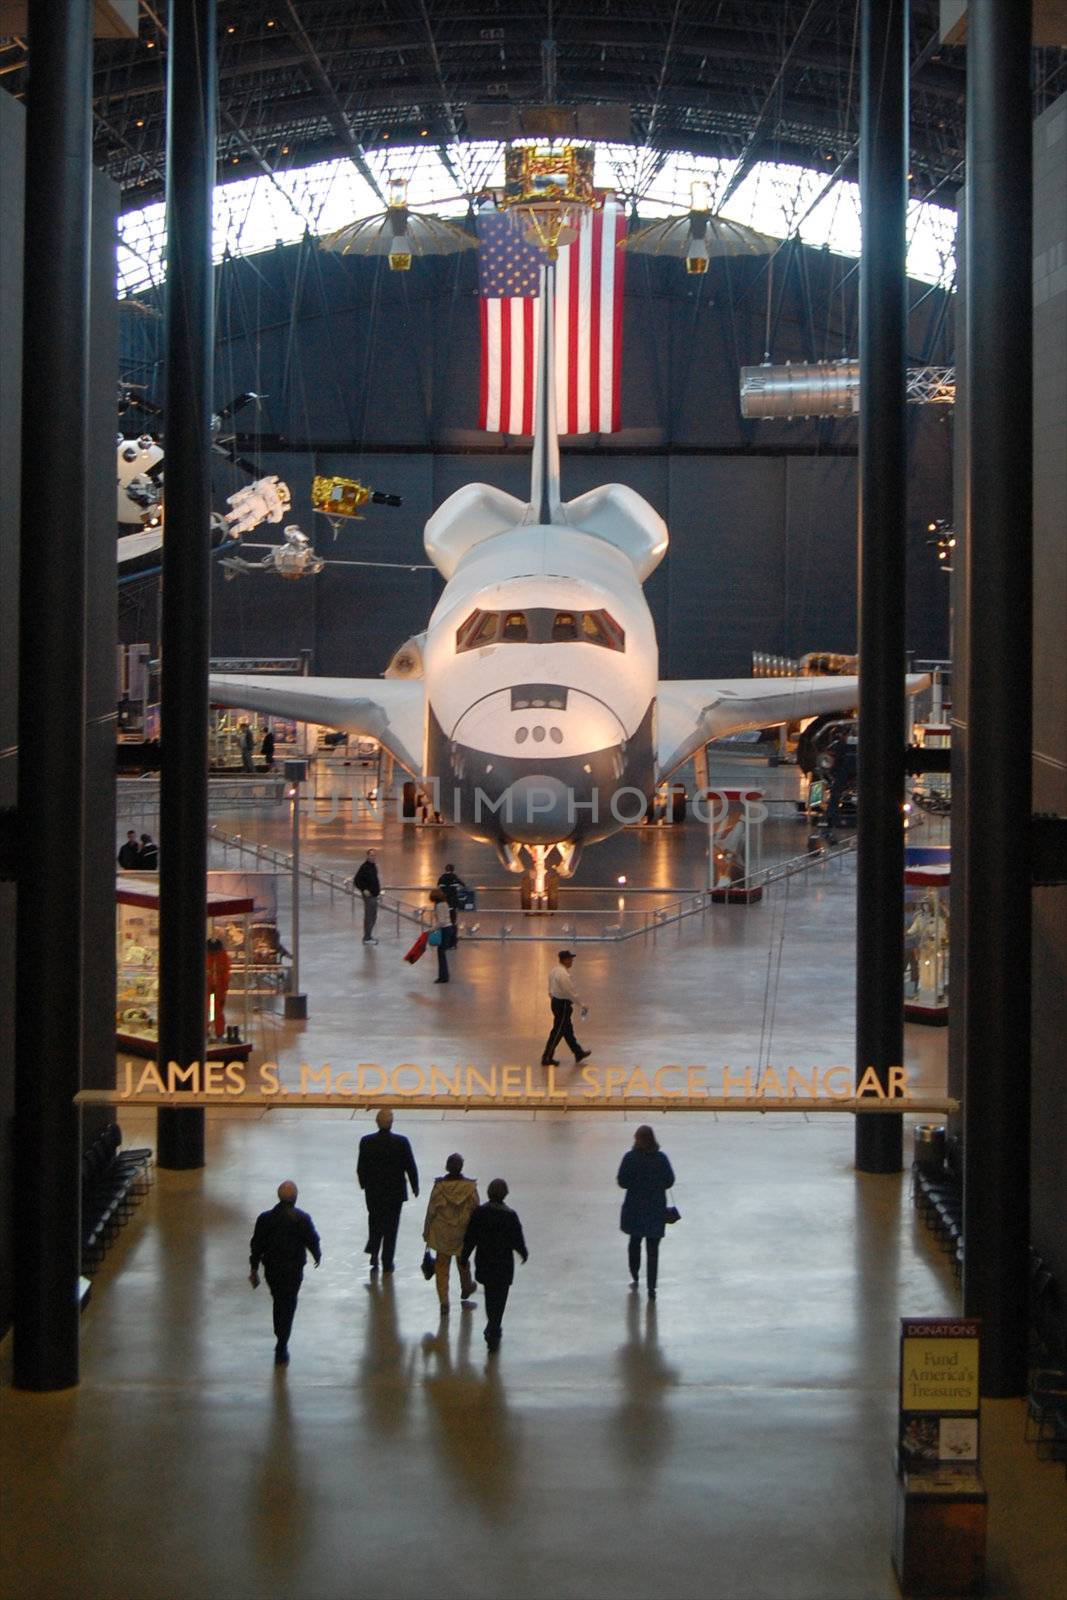 Space shuttle Enterprise by tyroneburkemedia@gmail.com